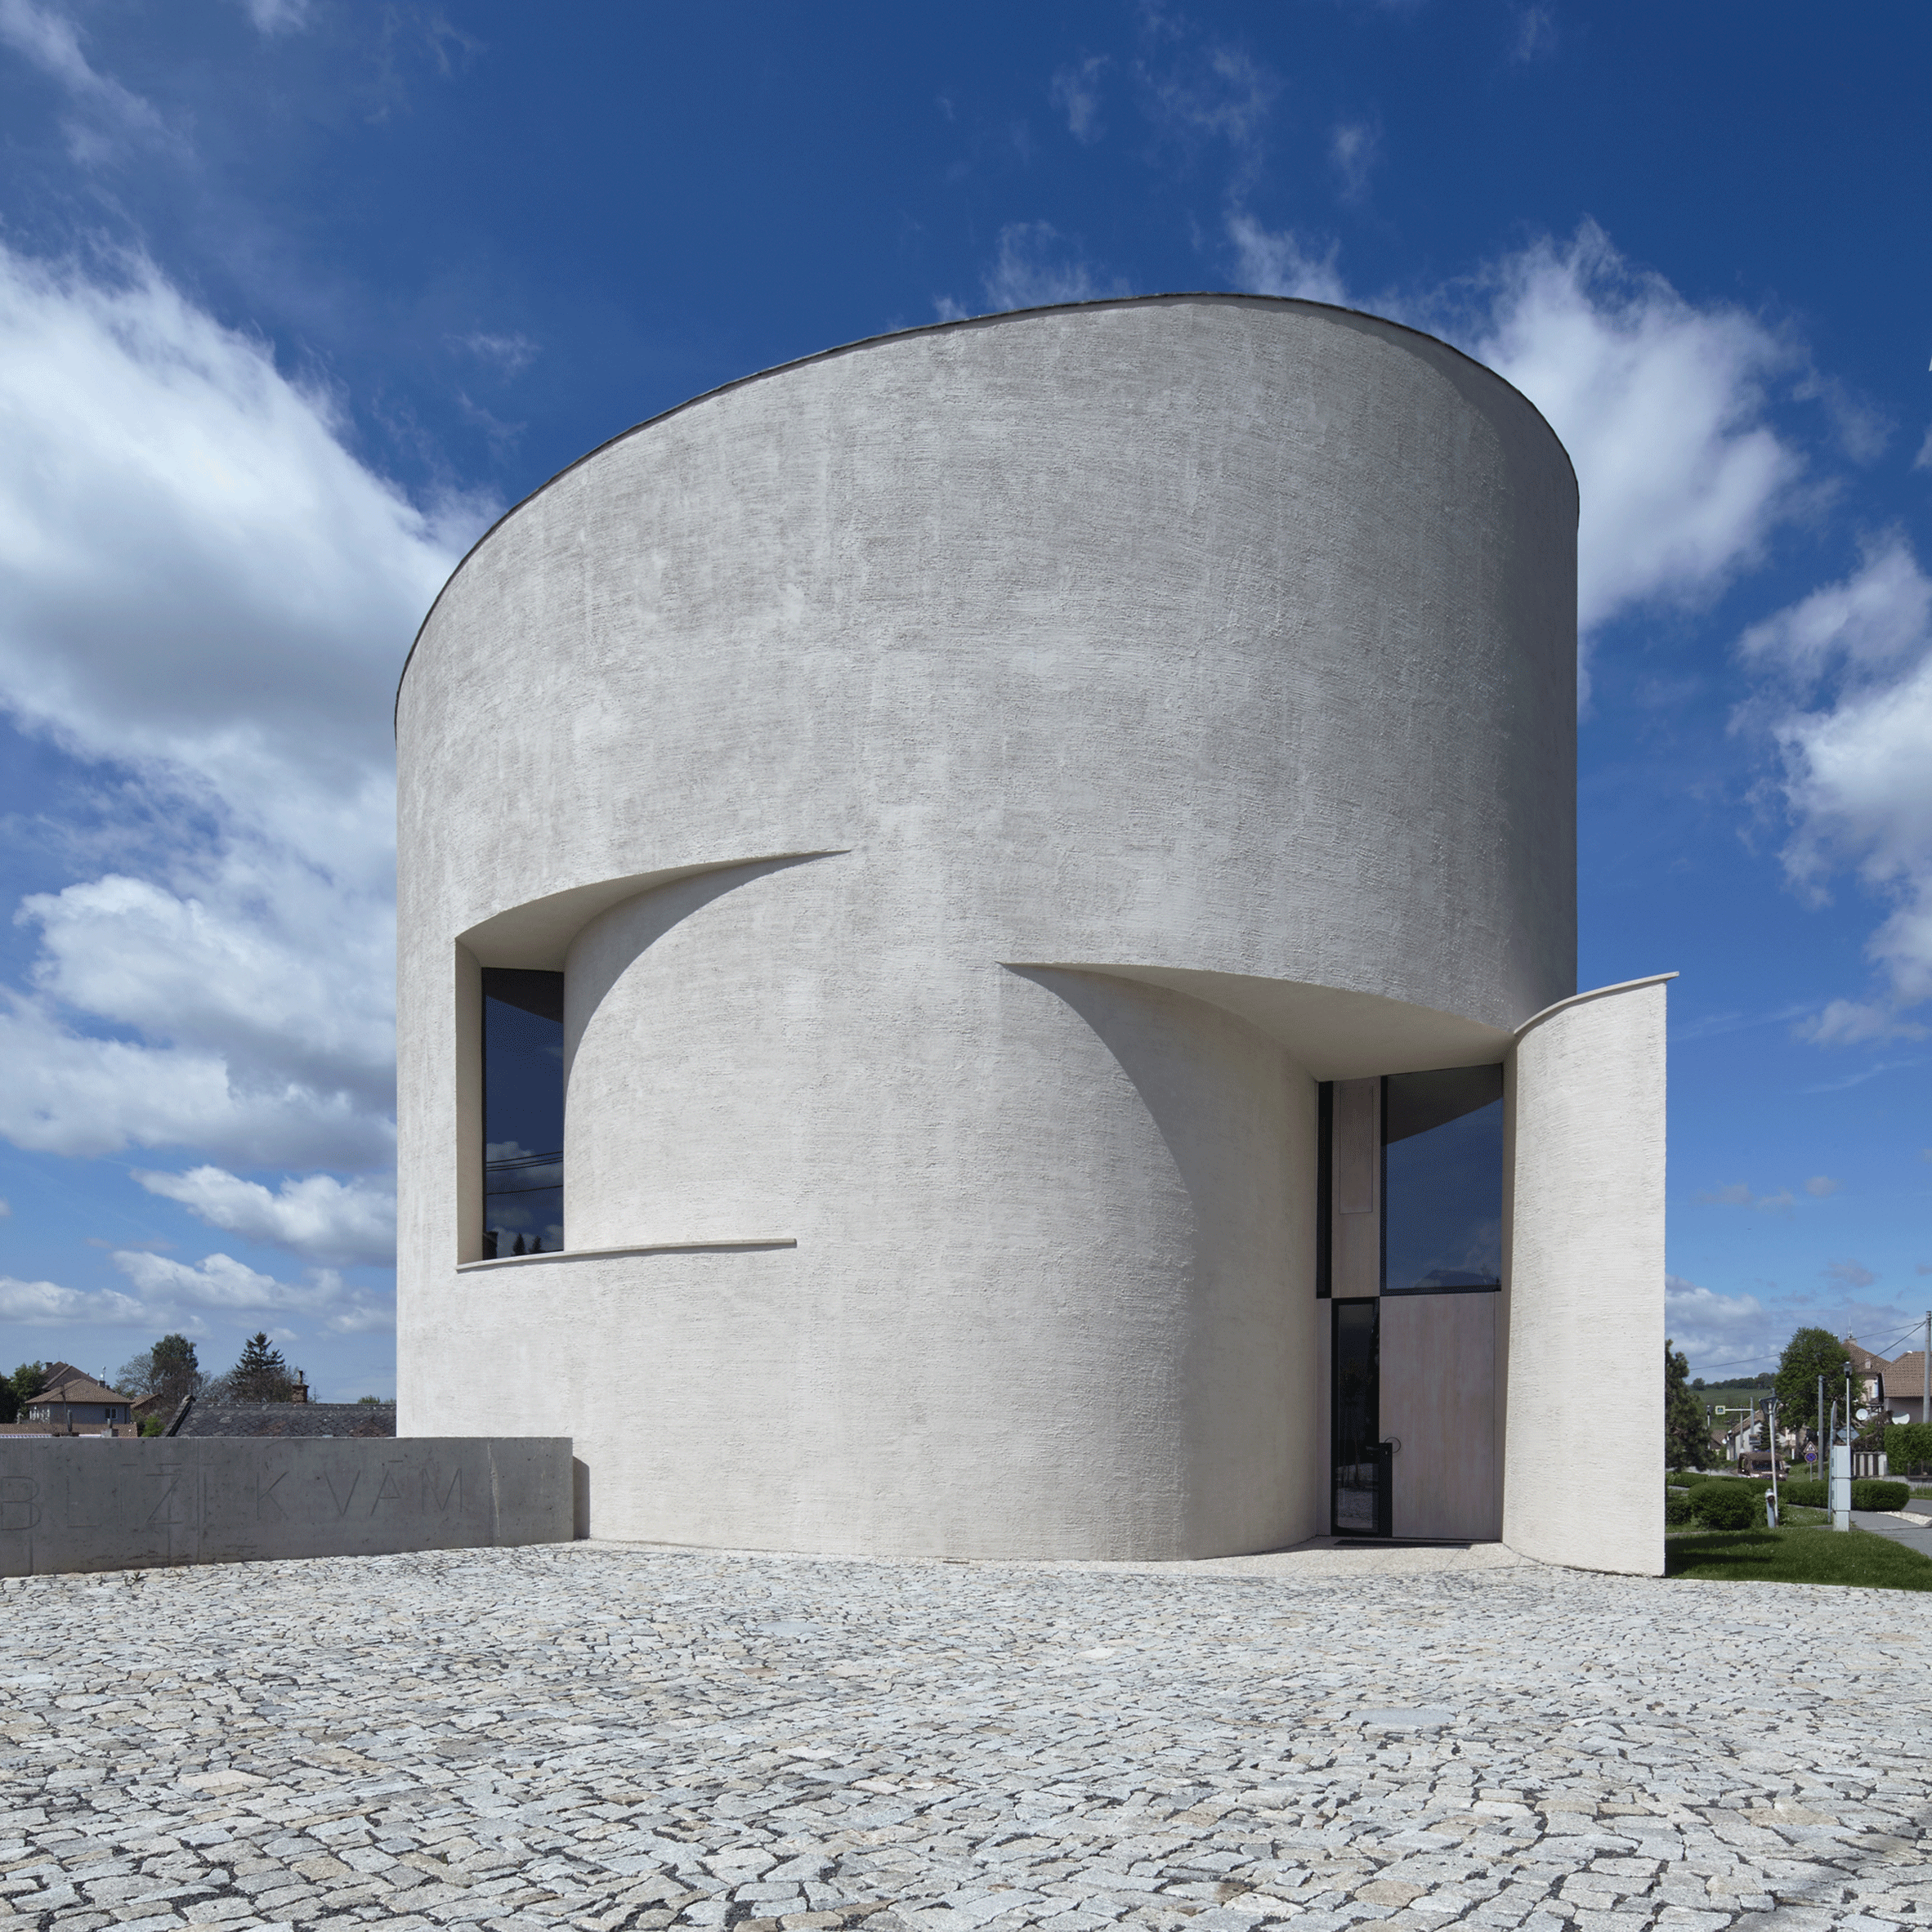 Atelier Štěpán completes cylindrical white church in the Czech Republic